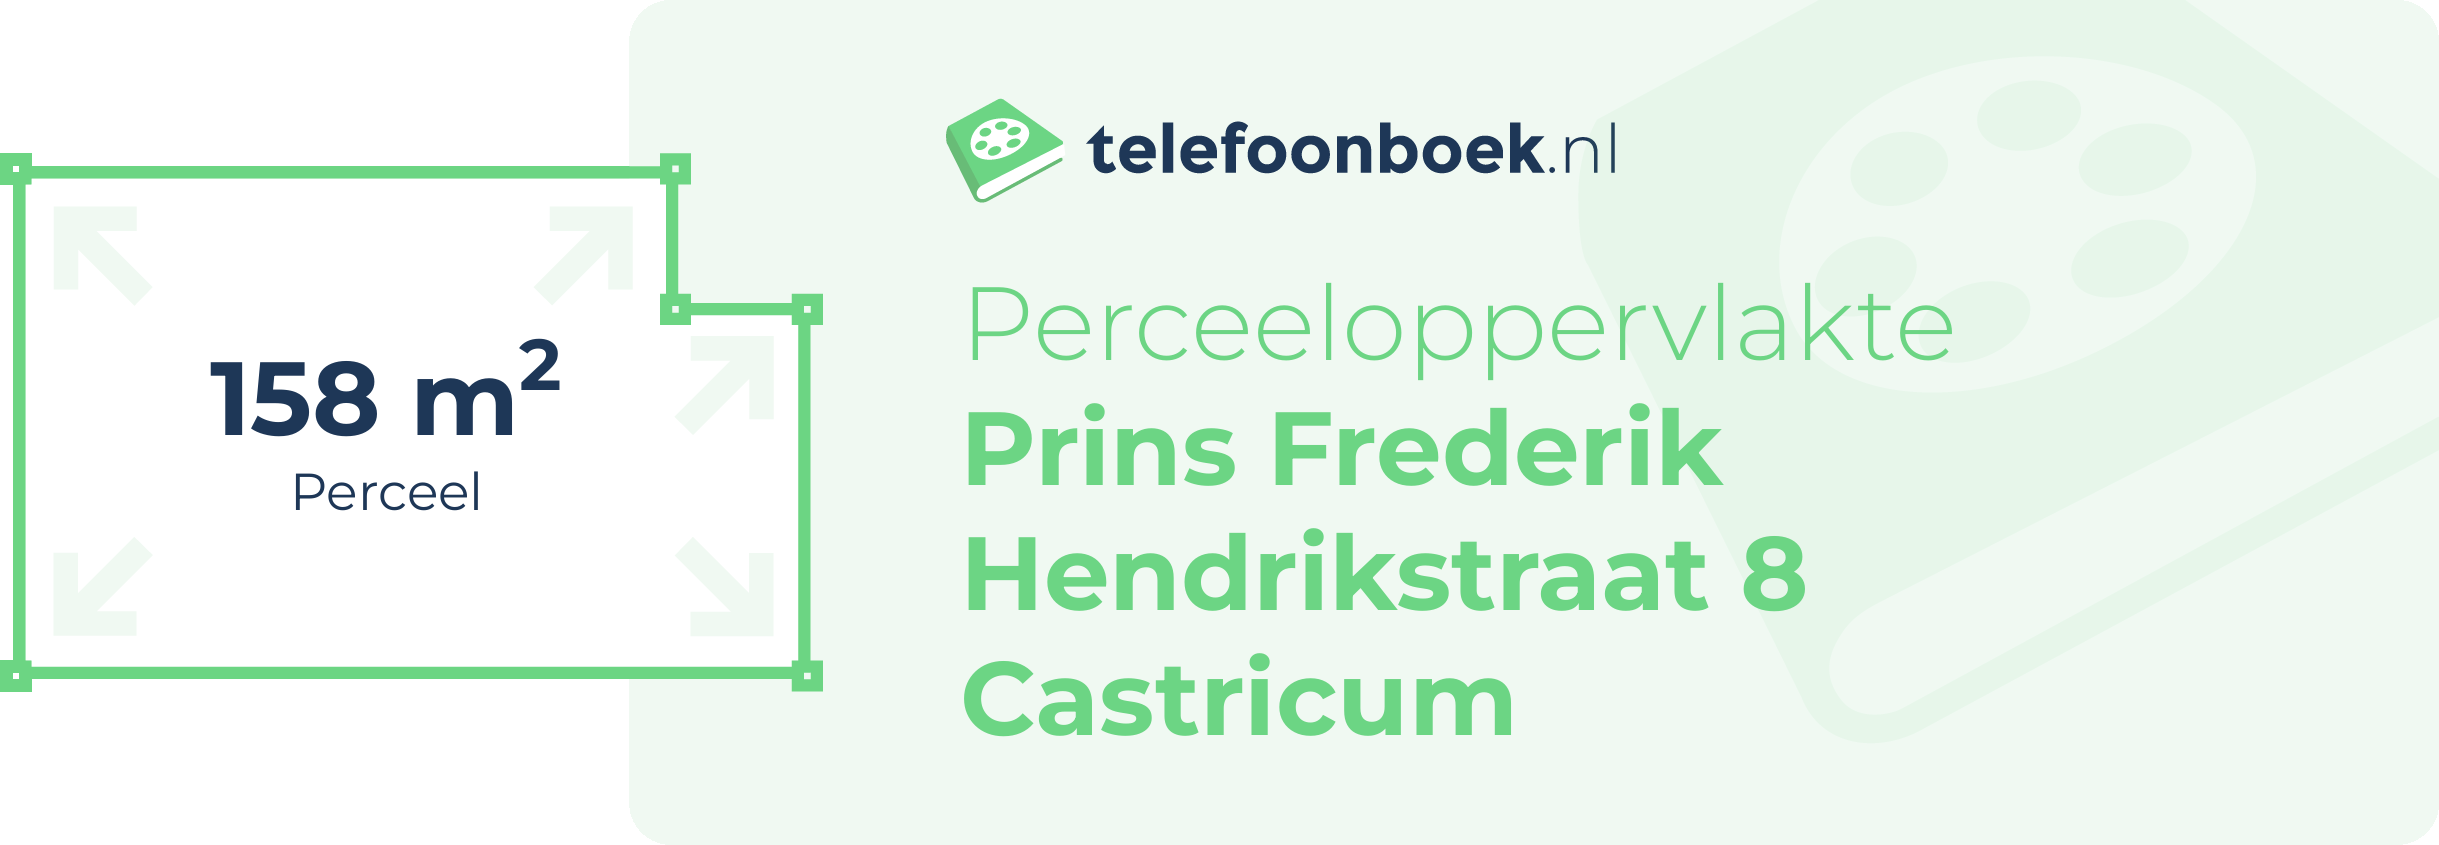 Perceeloppervlakte Prins Frederik Hendrikstraat 8 Castricum